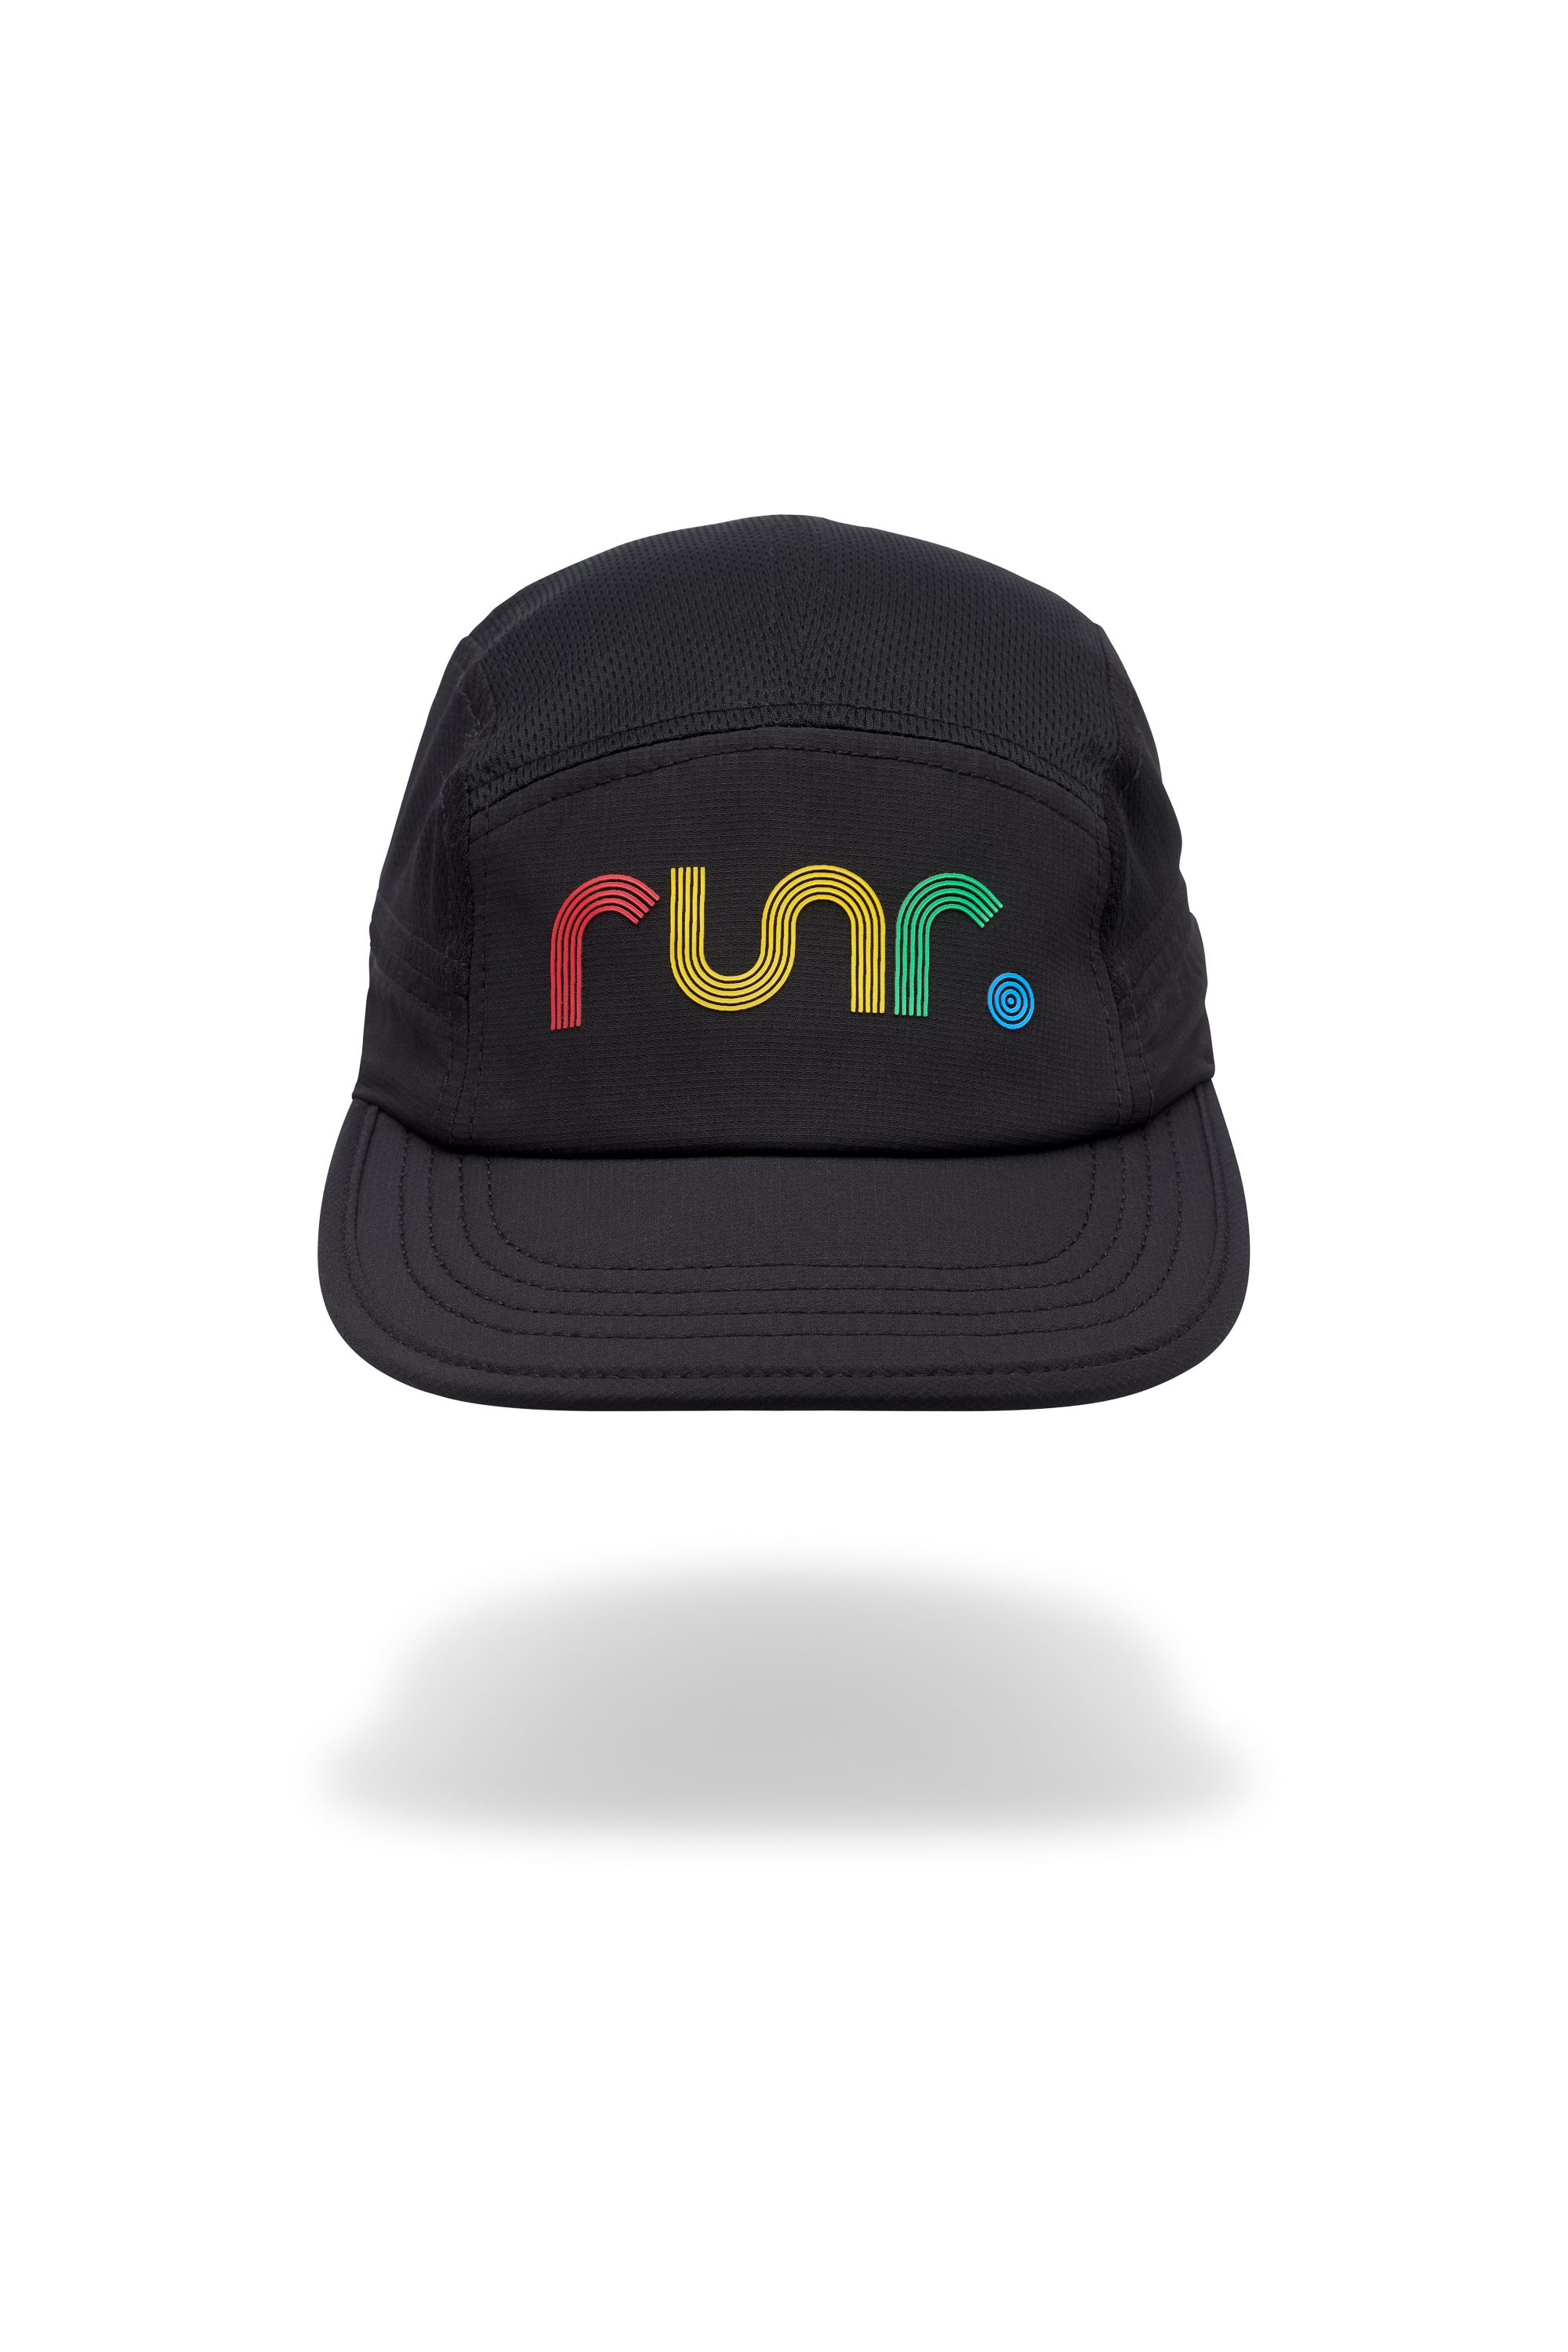 Runr 80's Technical Running Cap